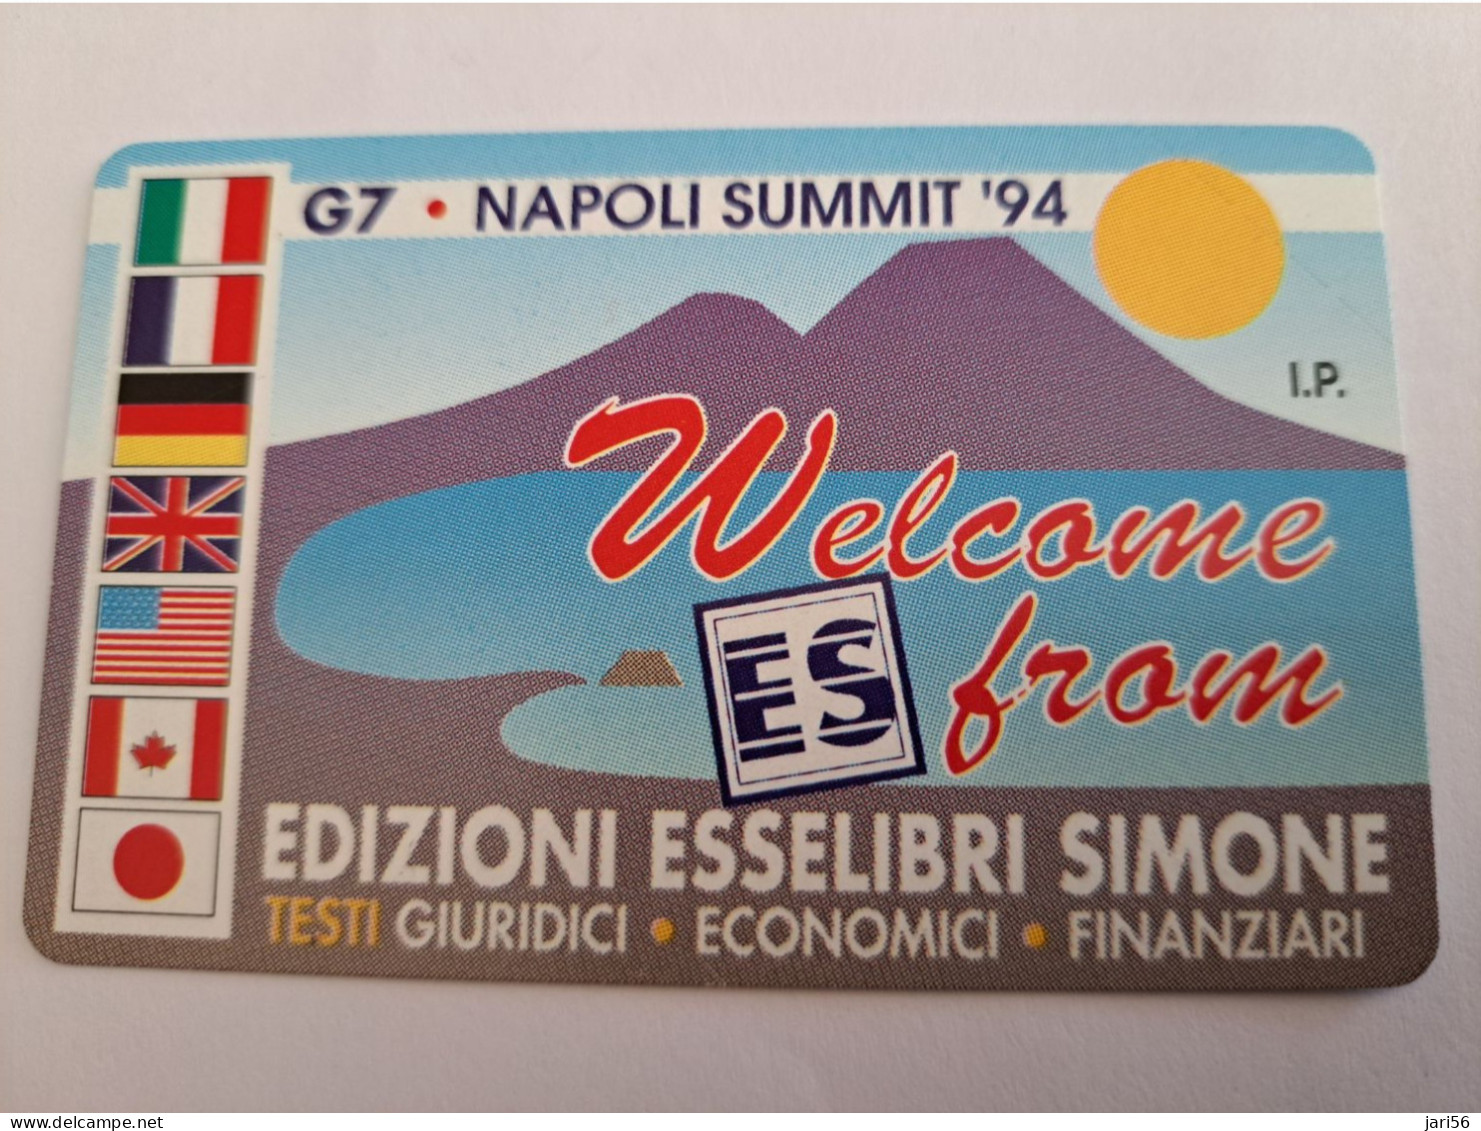 ITALIA LIRE 2000 /G7 NAPOLI SUMMIT '94 / WELCOME FROM ES/ FLAGS/  CARD / MINT    PREPAID   ** 16653** - Öff. Diverse TK